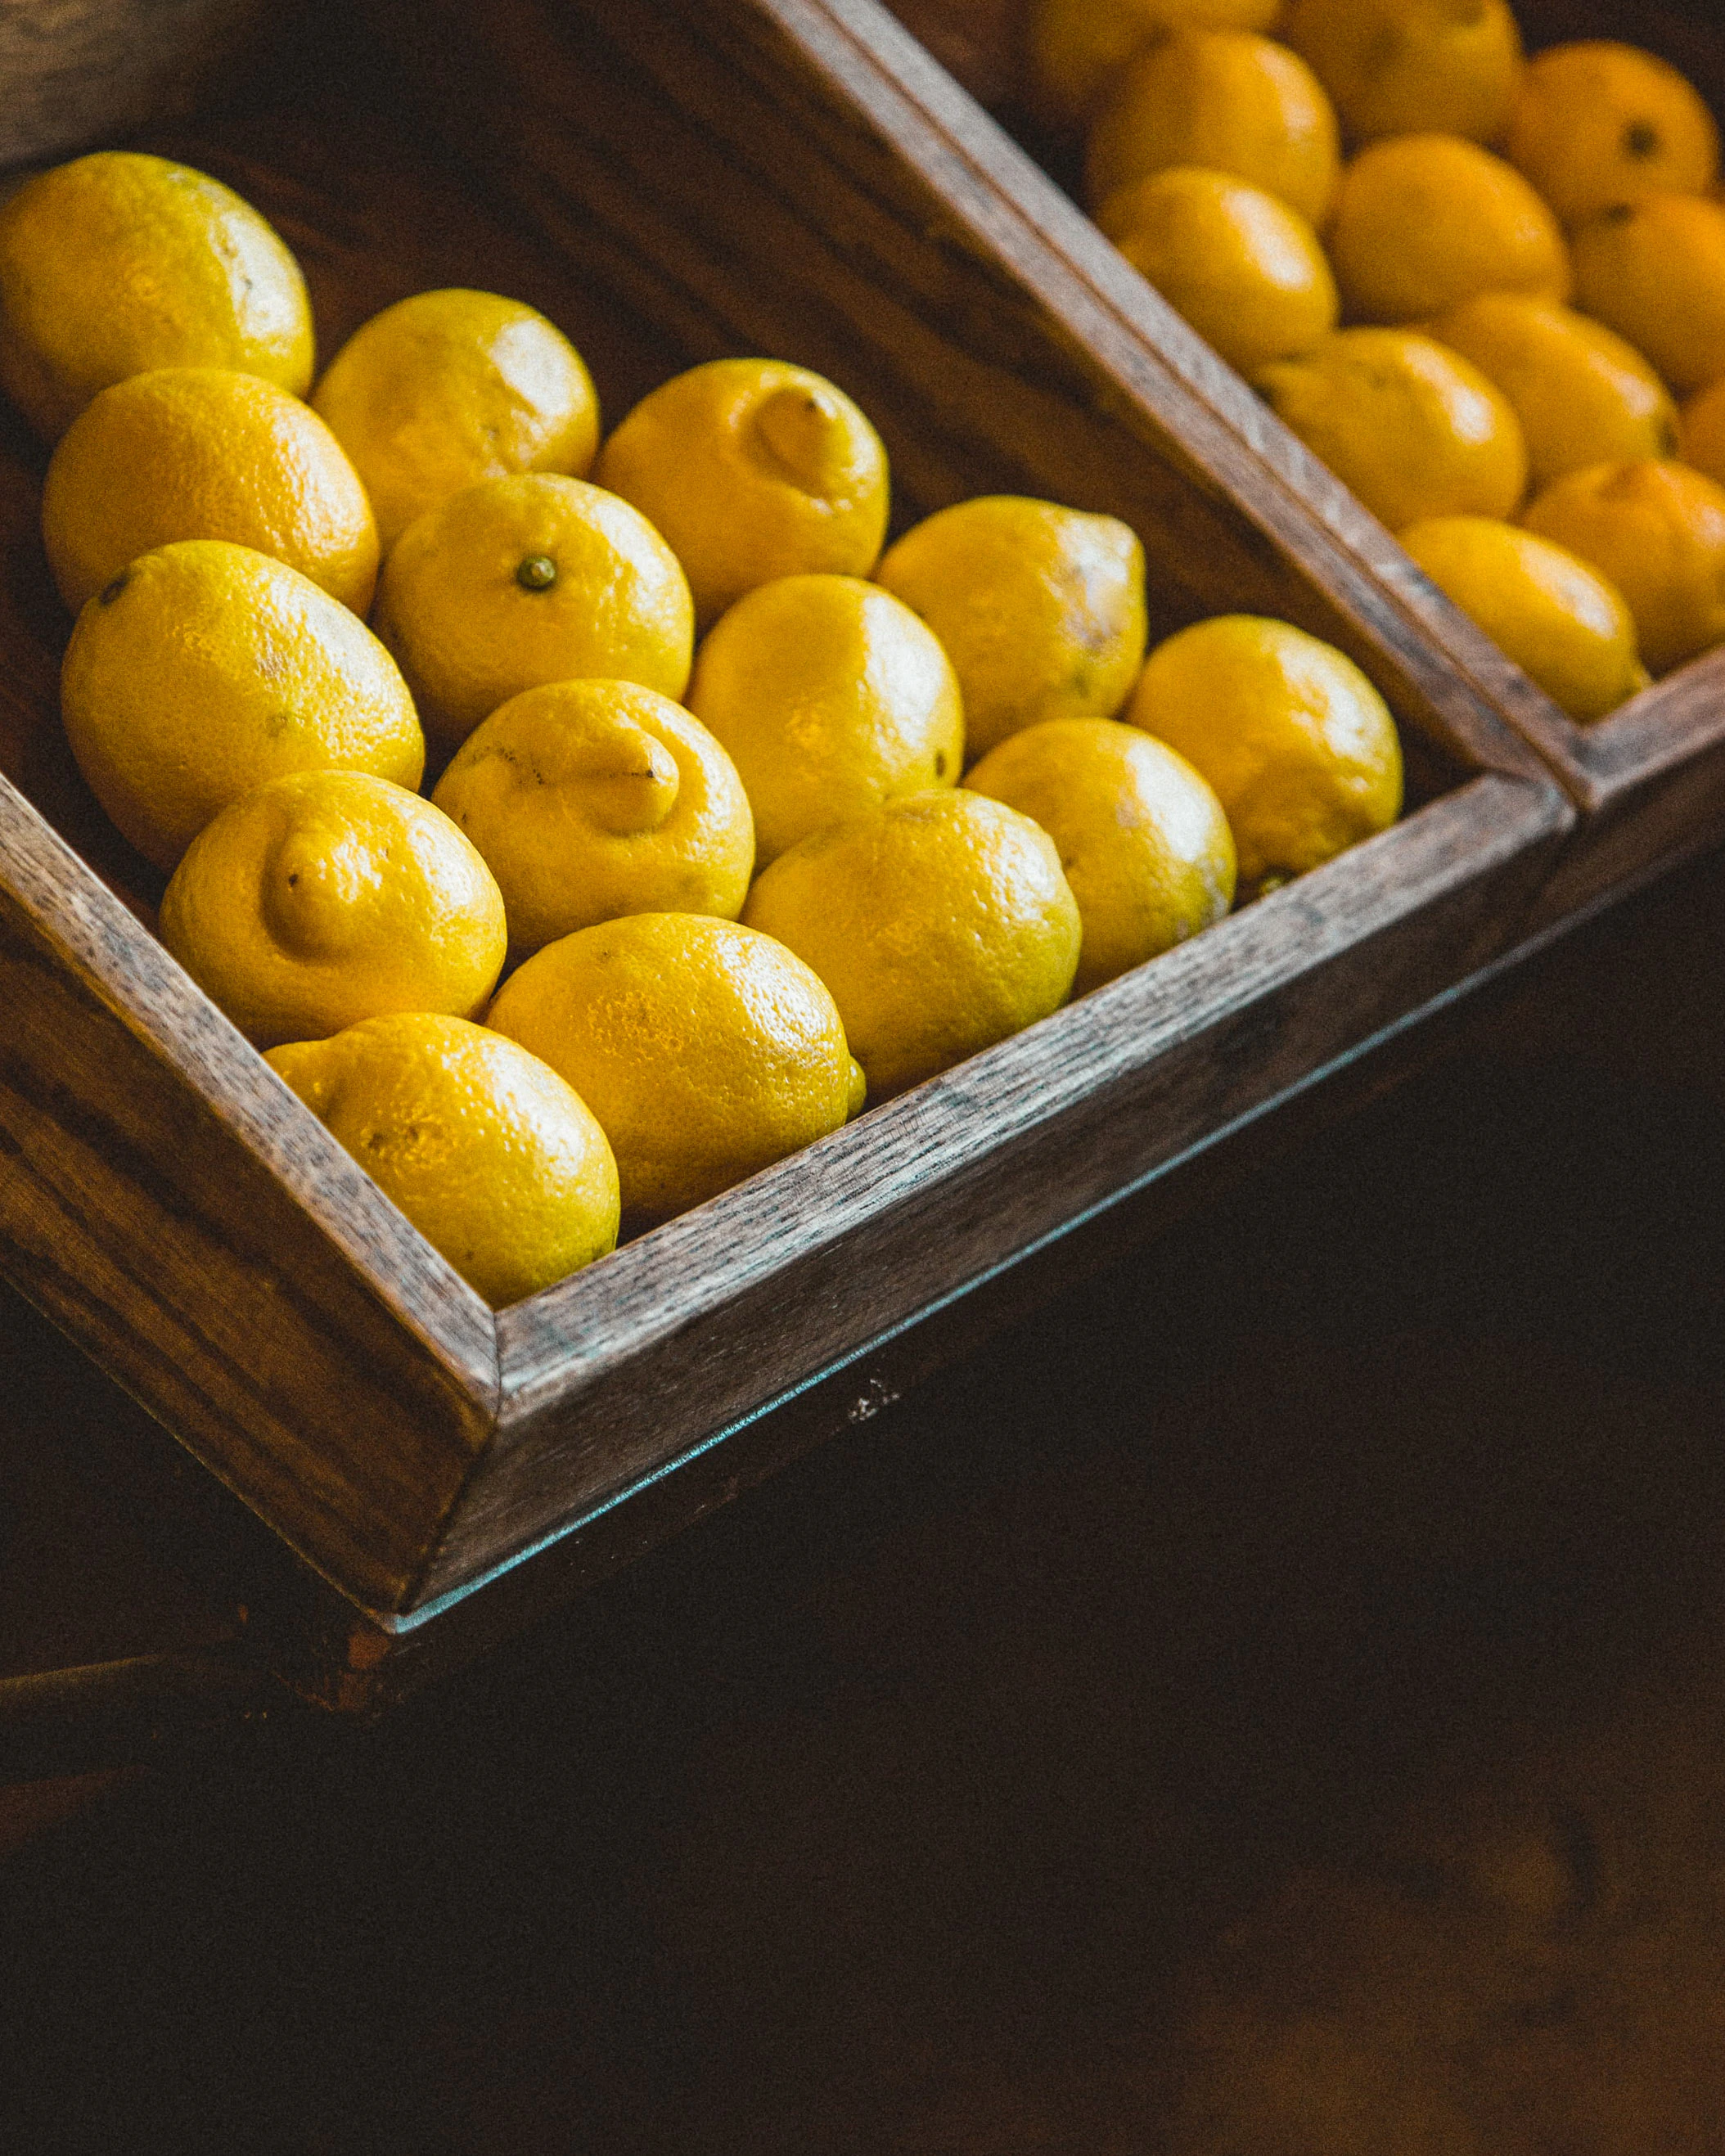 Lemons in wooden crates.